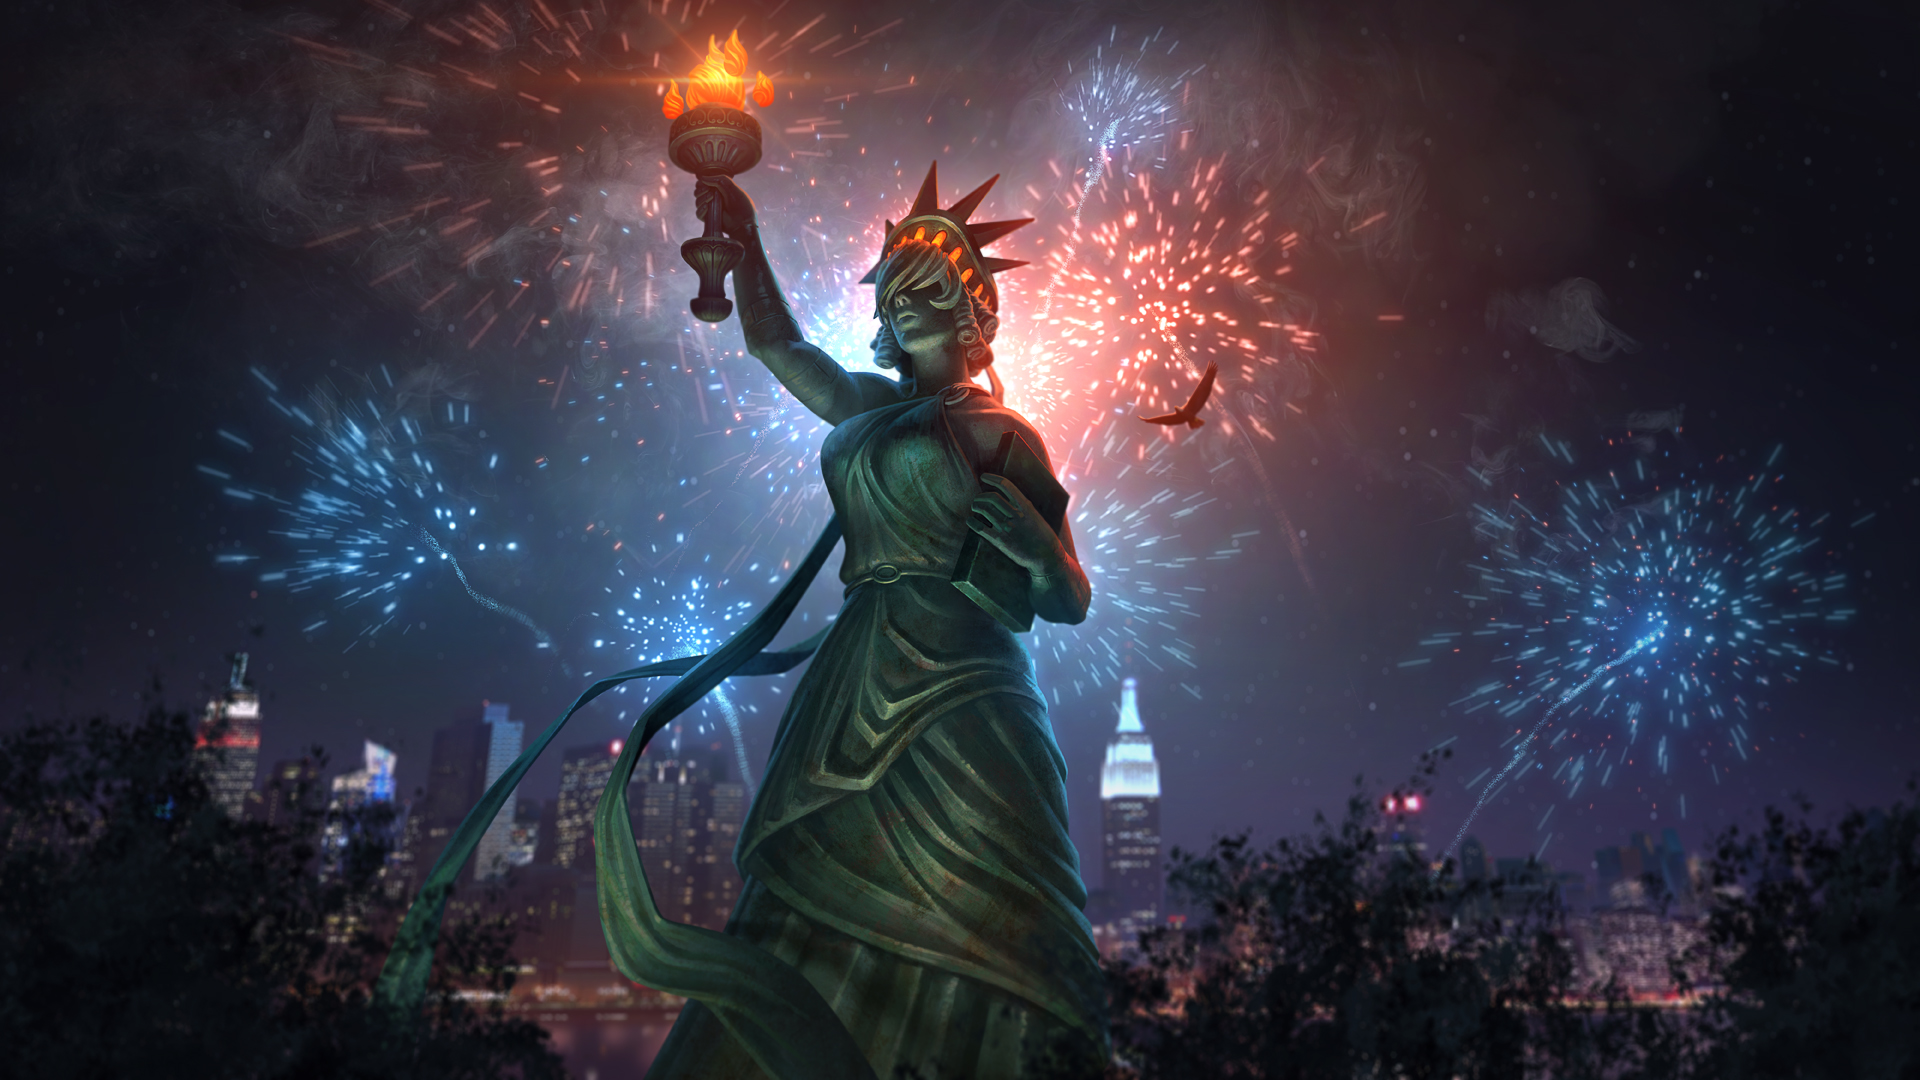 Lady Liberty Nox